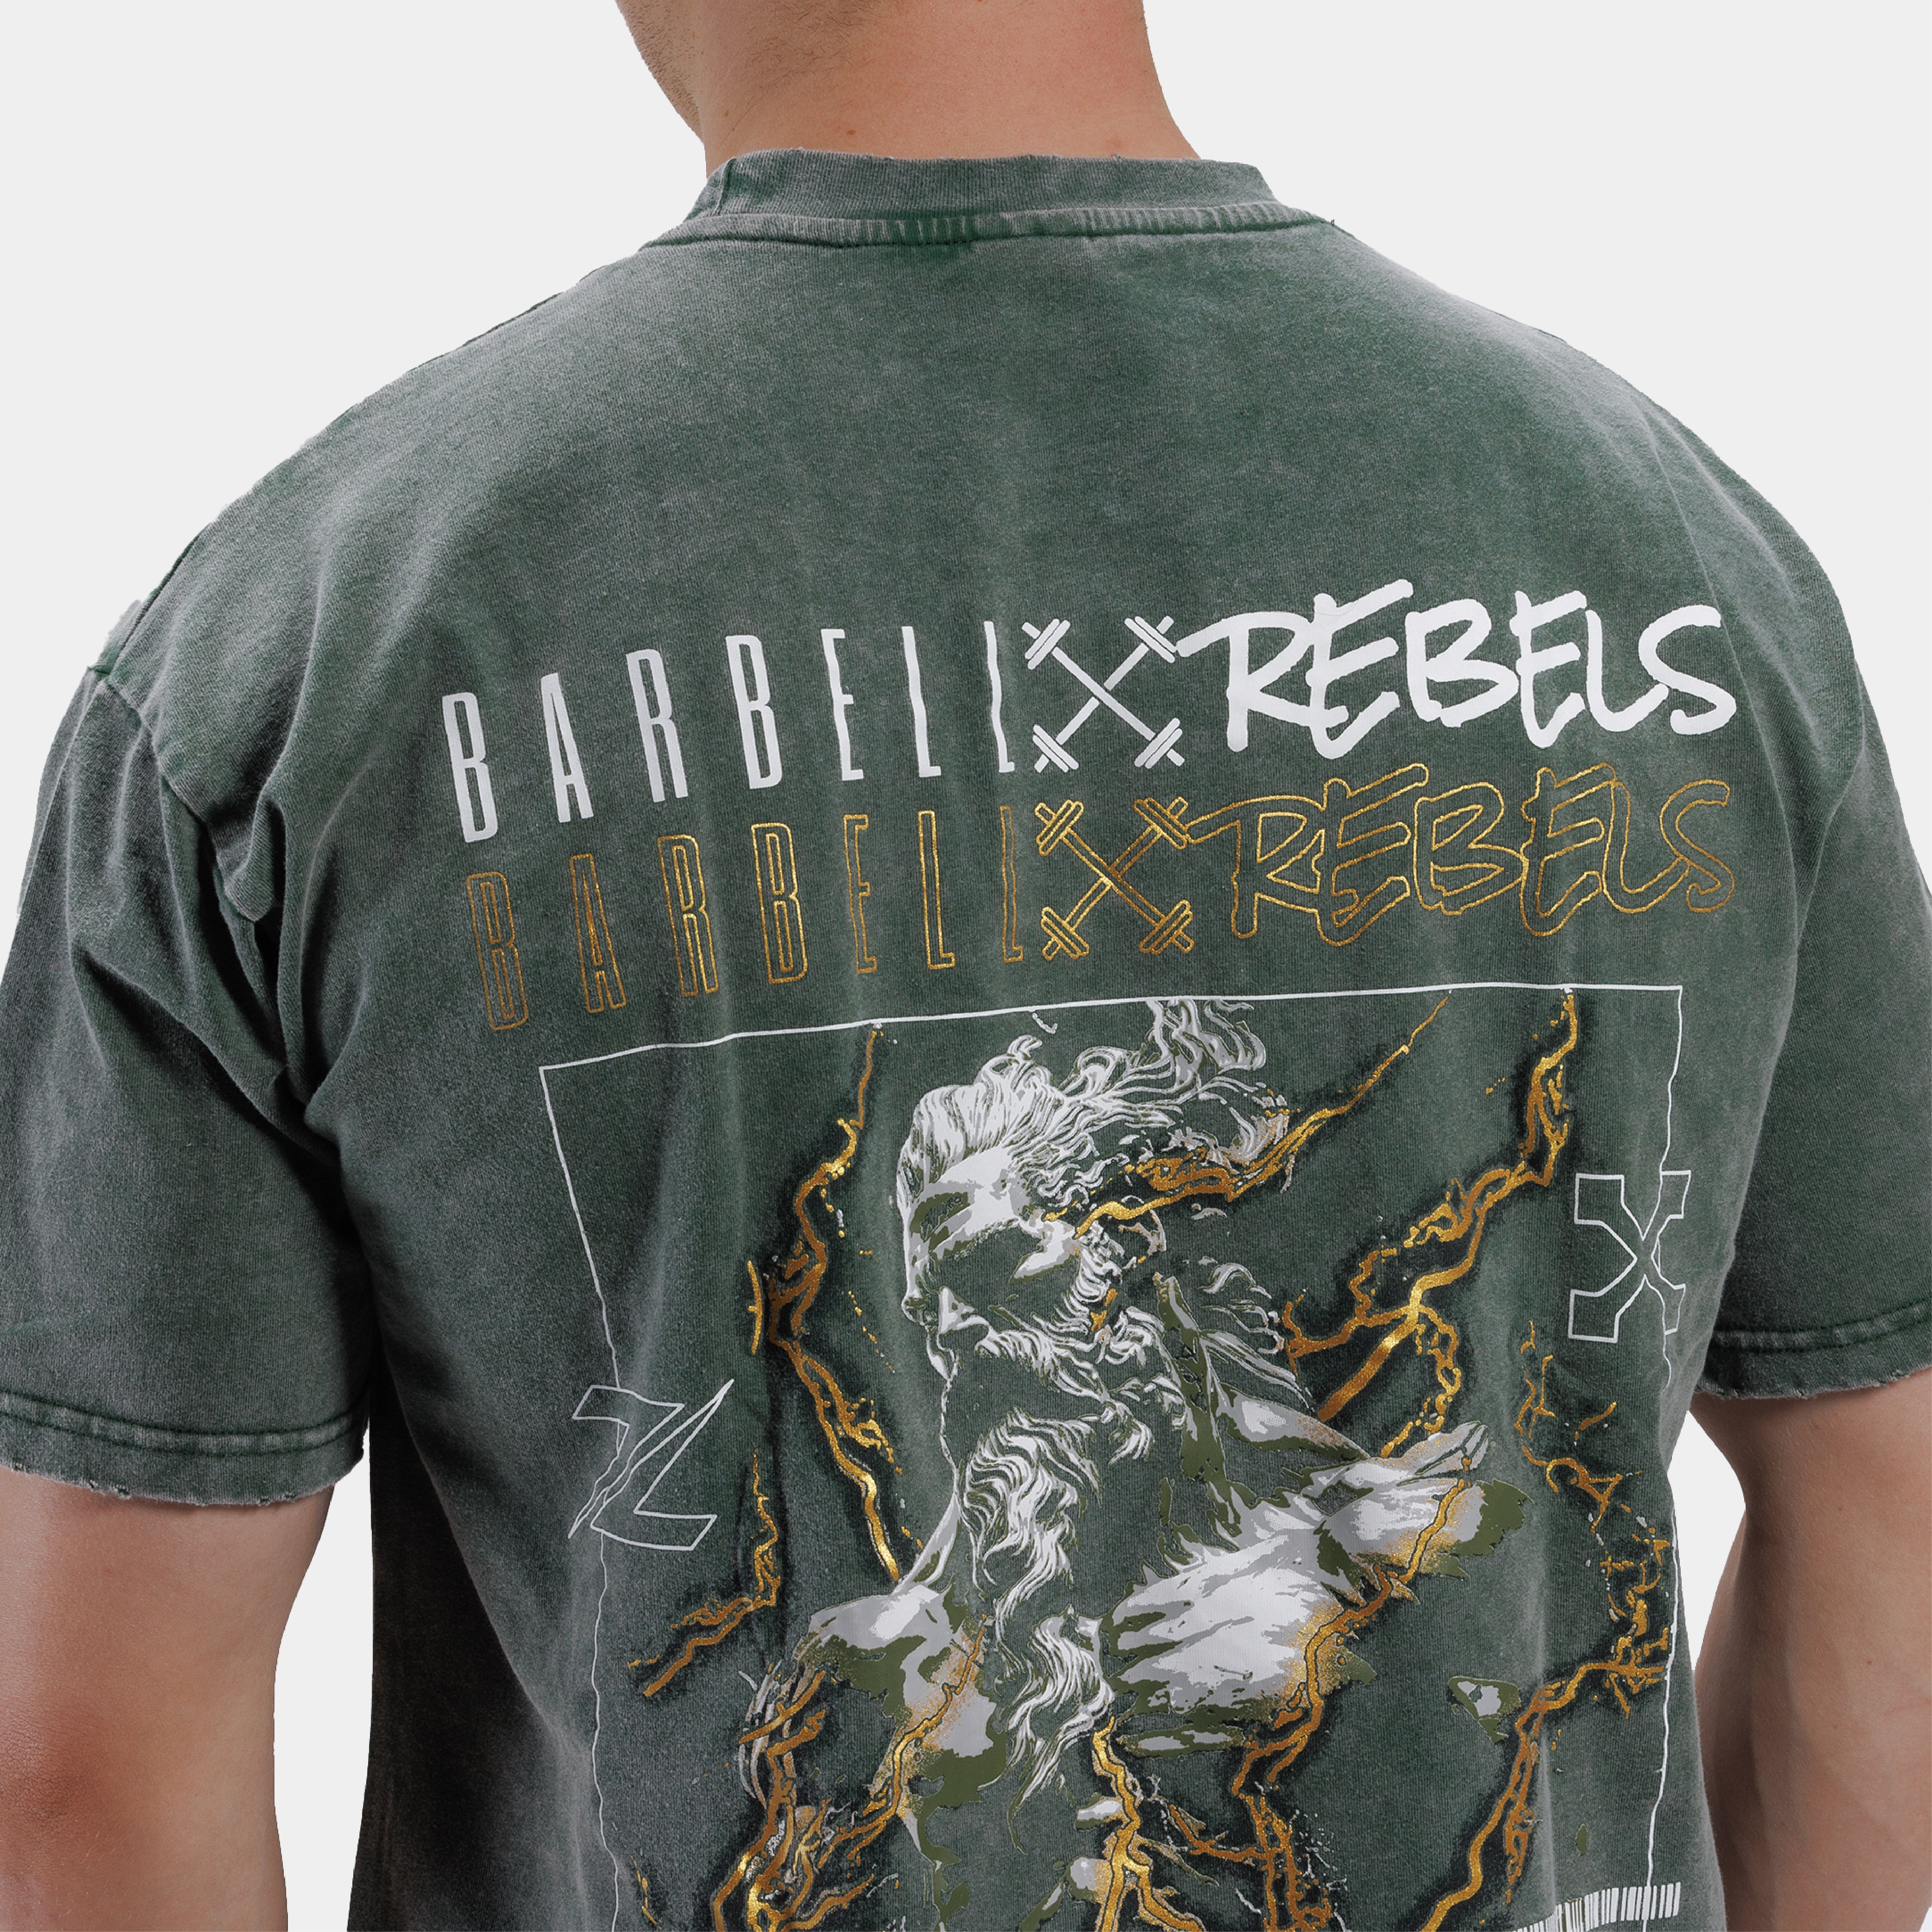 ZEUZ x Barbell Rebels Oversized Distressed Acid T-shirt - Unisex